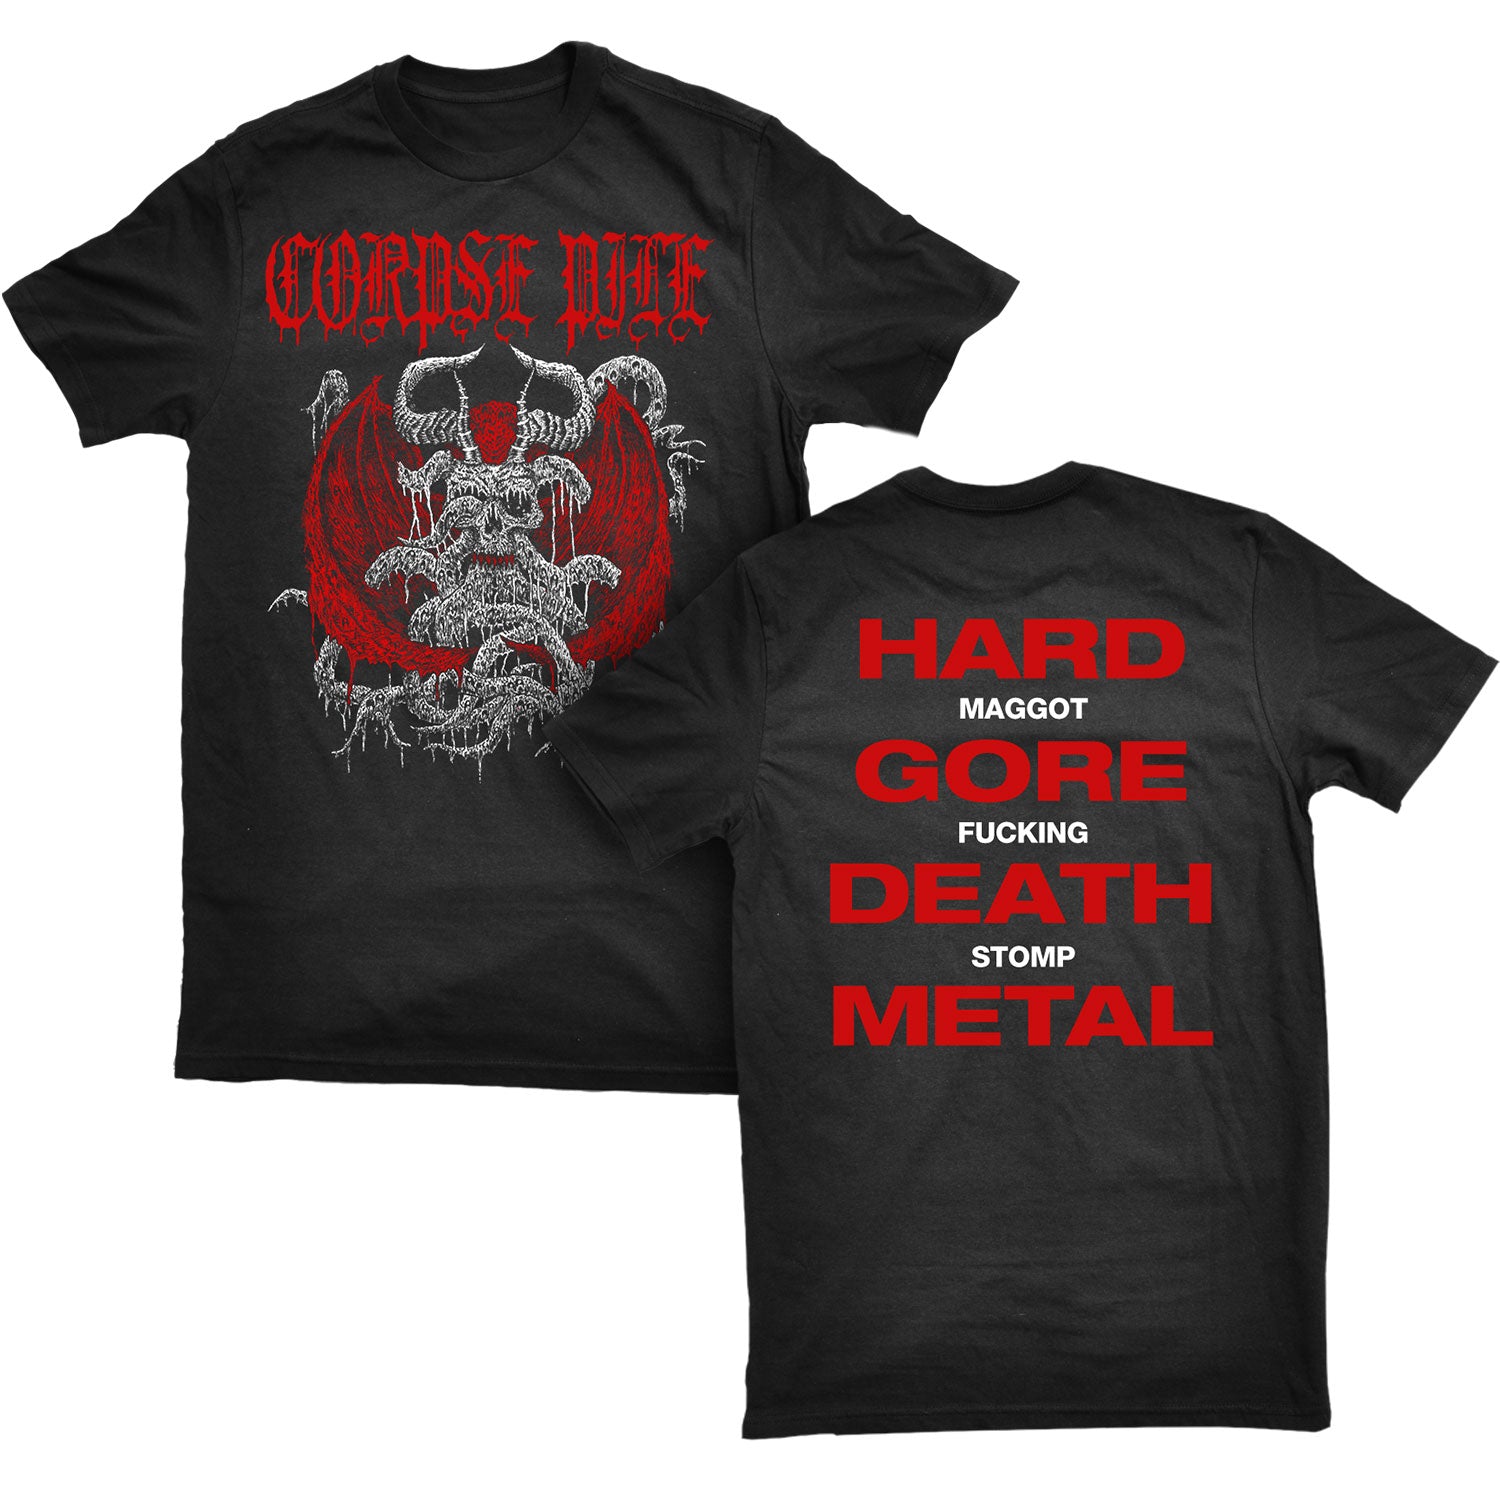 Corpse Pile HGDM T-Shirt *PREORDER*